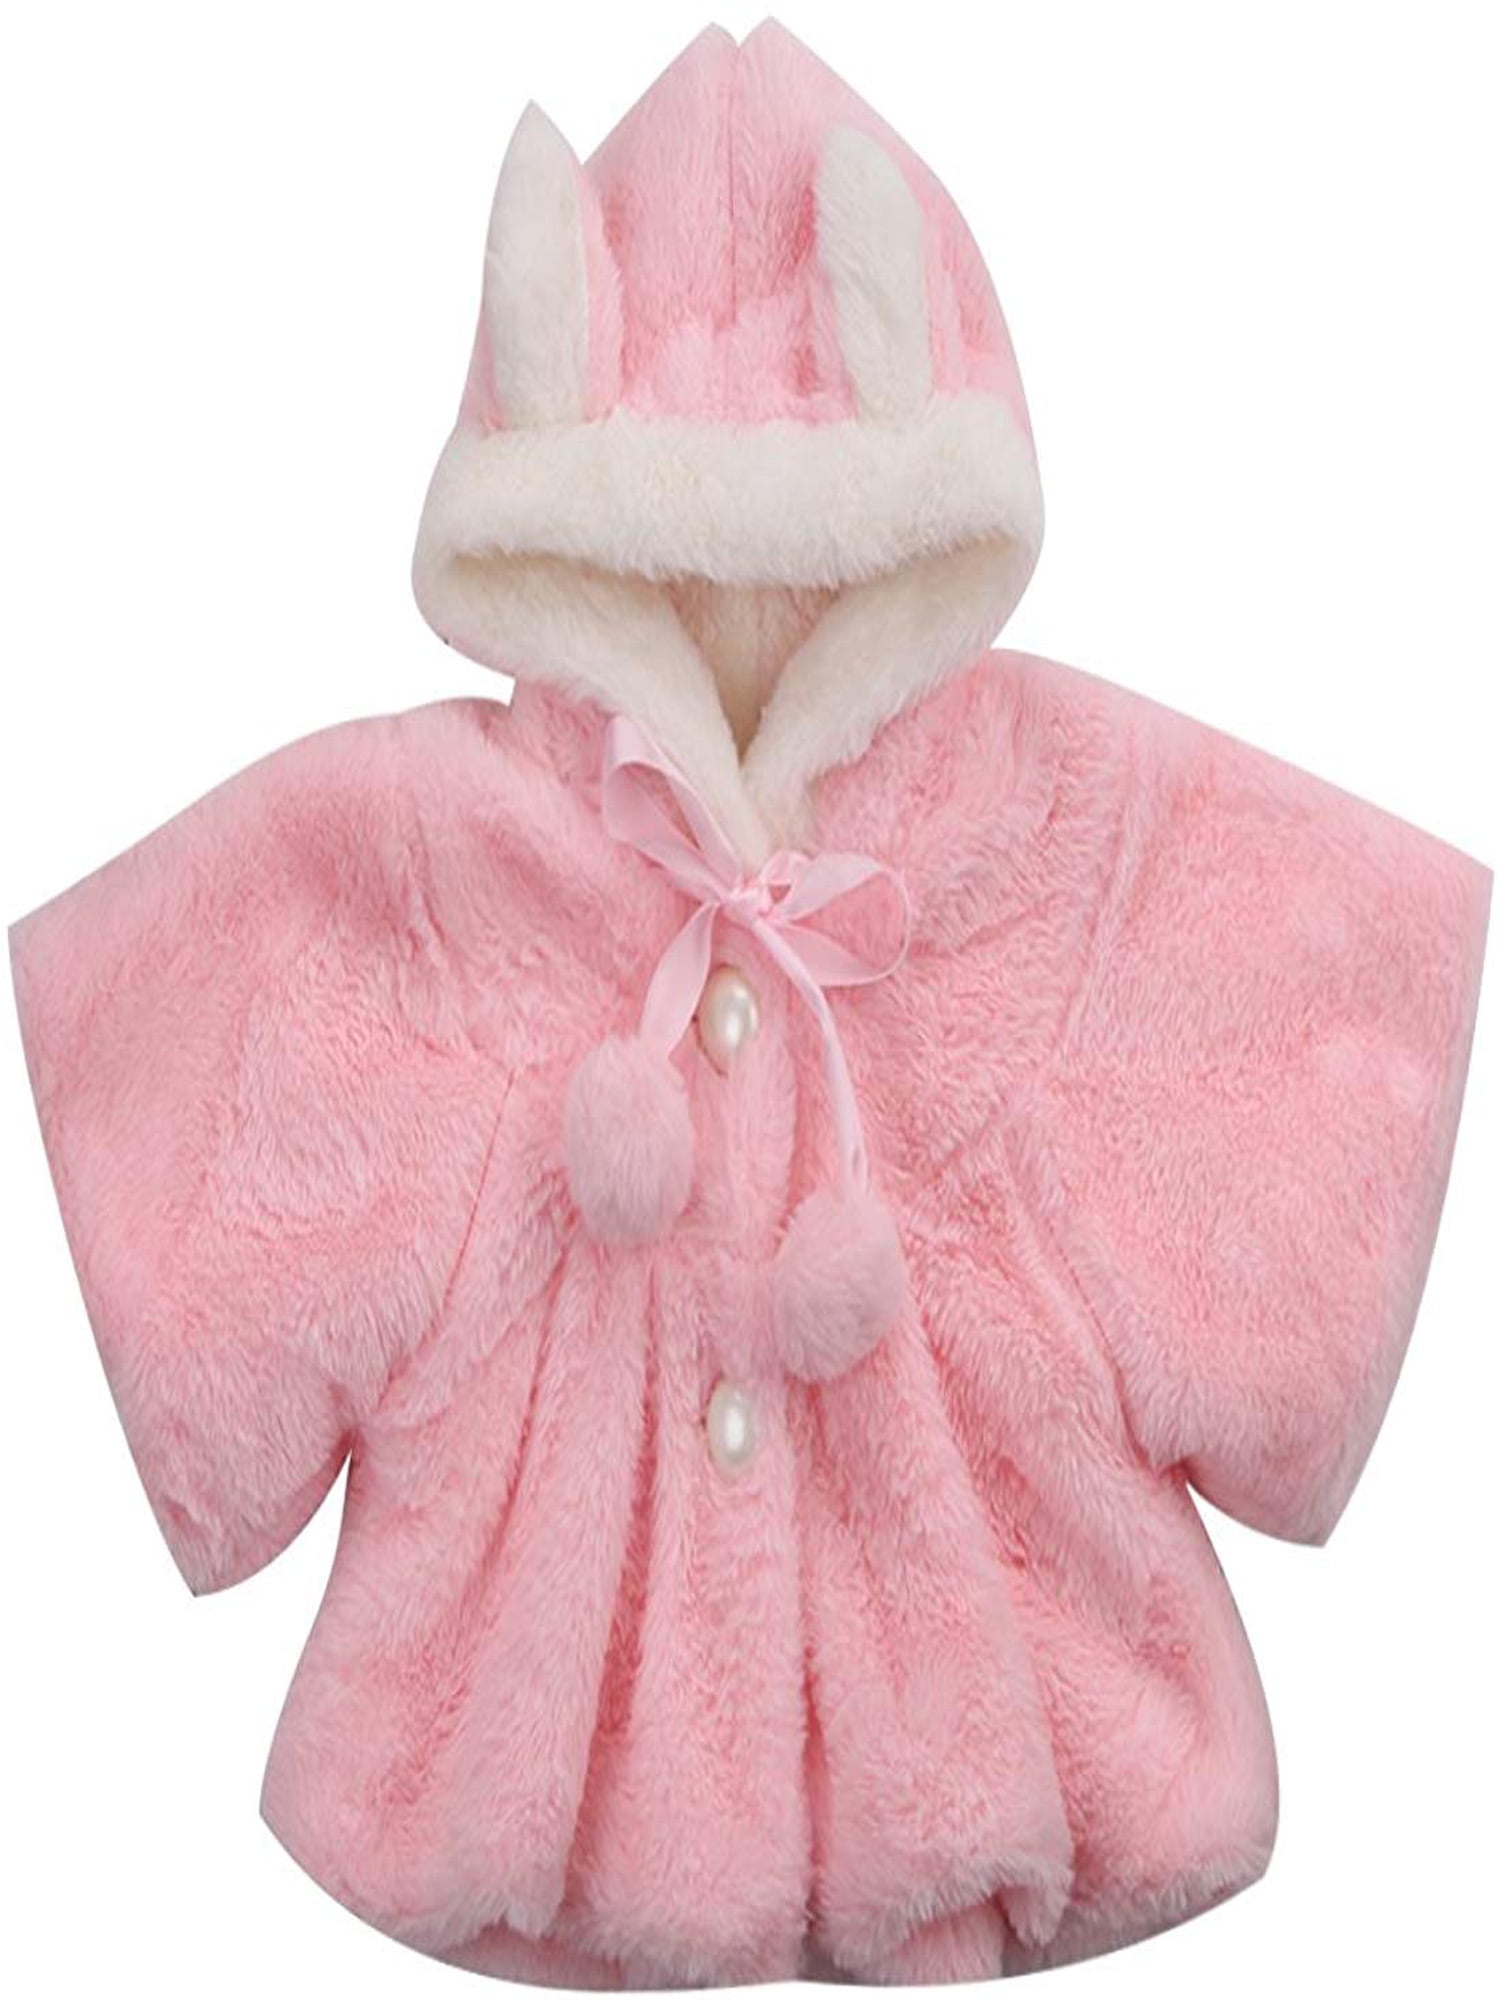 Baby Girls Kids Toddler Fur Hooded Coat Winter Rabbit Bunny Ear Jacket Outerwear